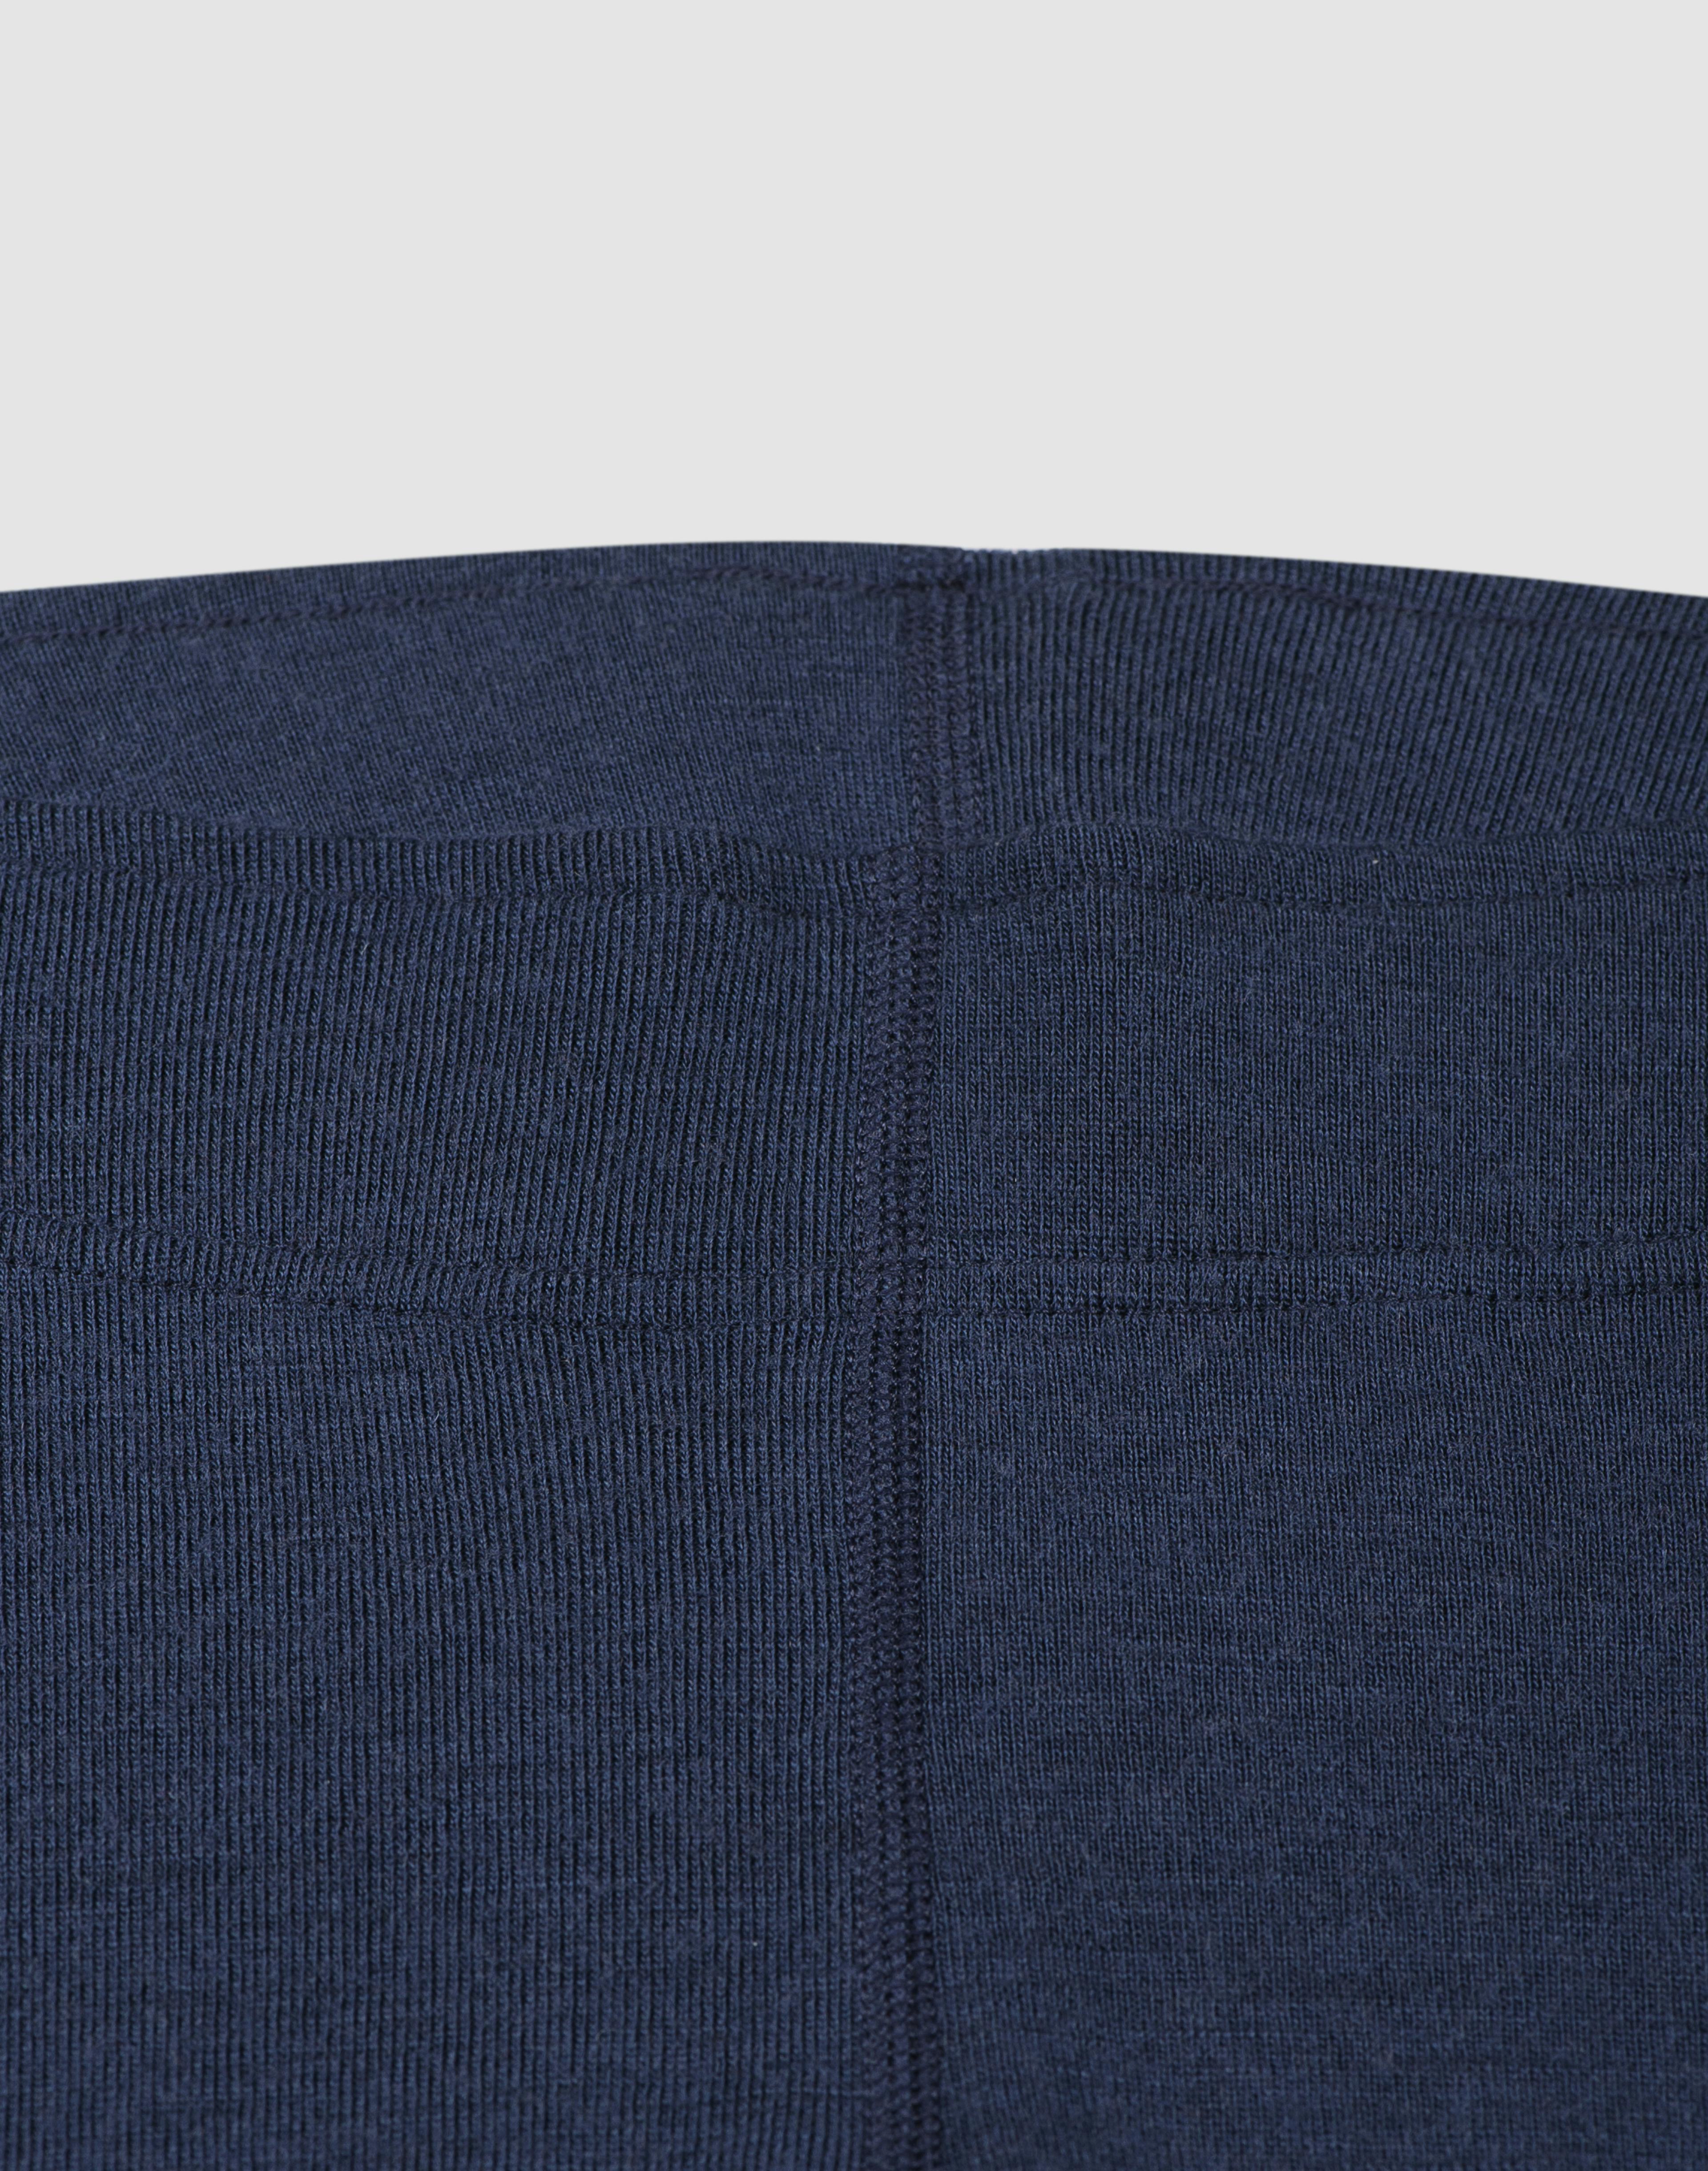 Merino Wool Tights: Navy – Biddle and Bop